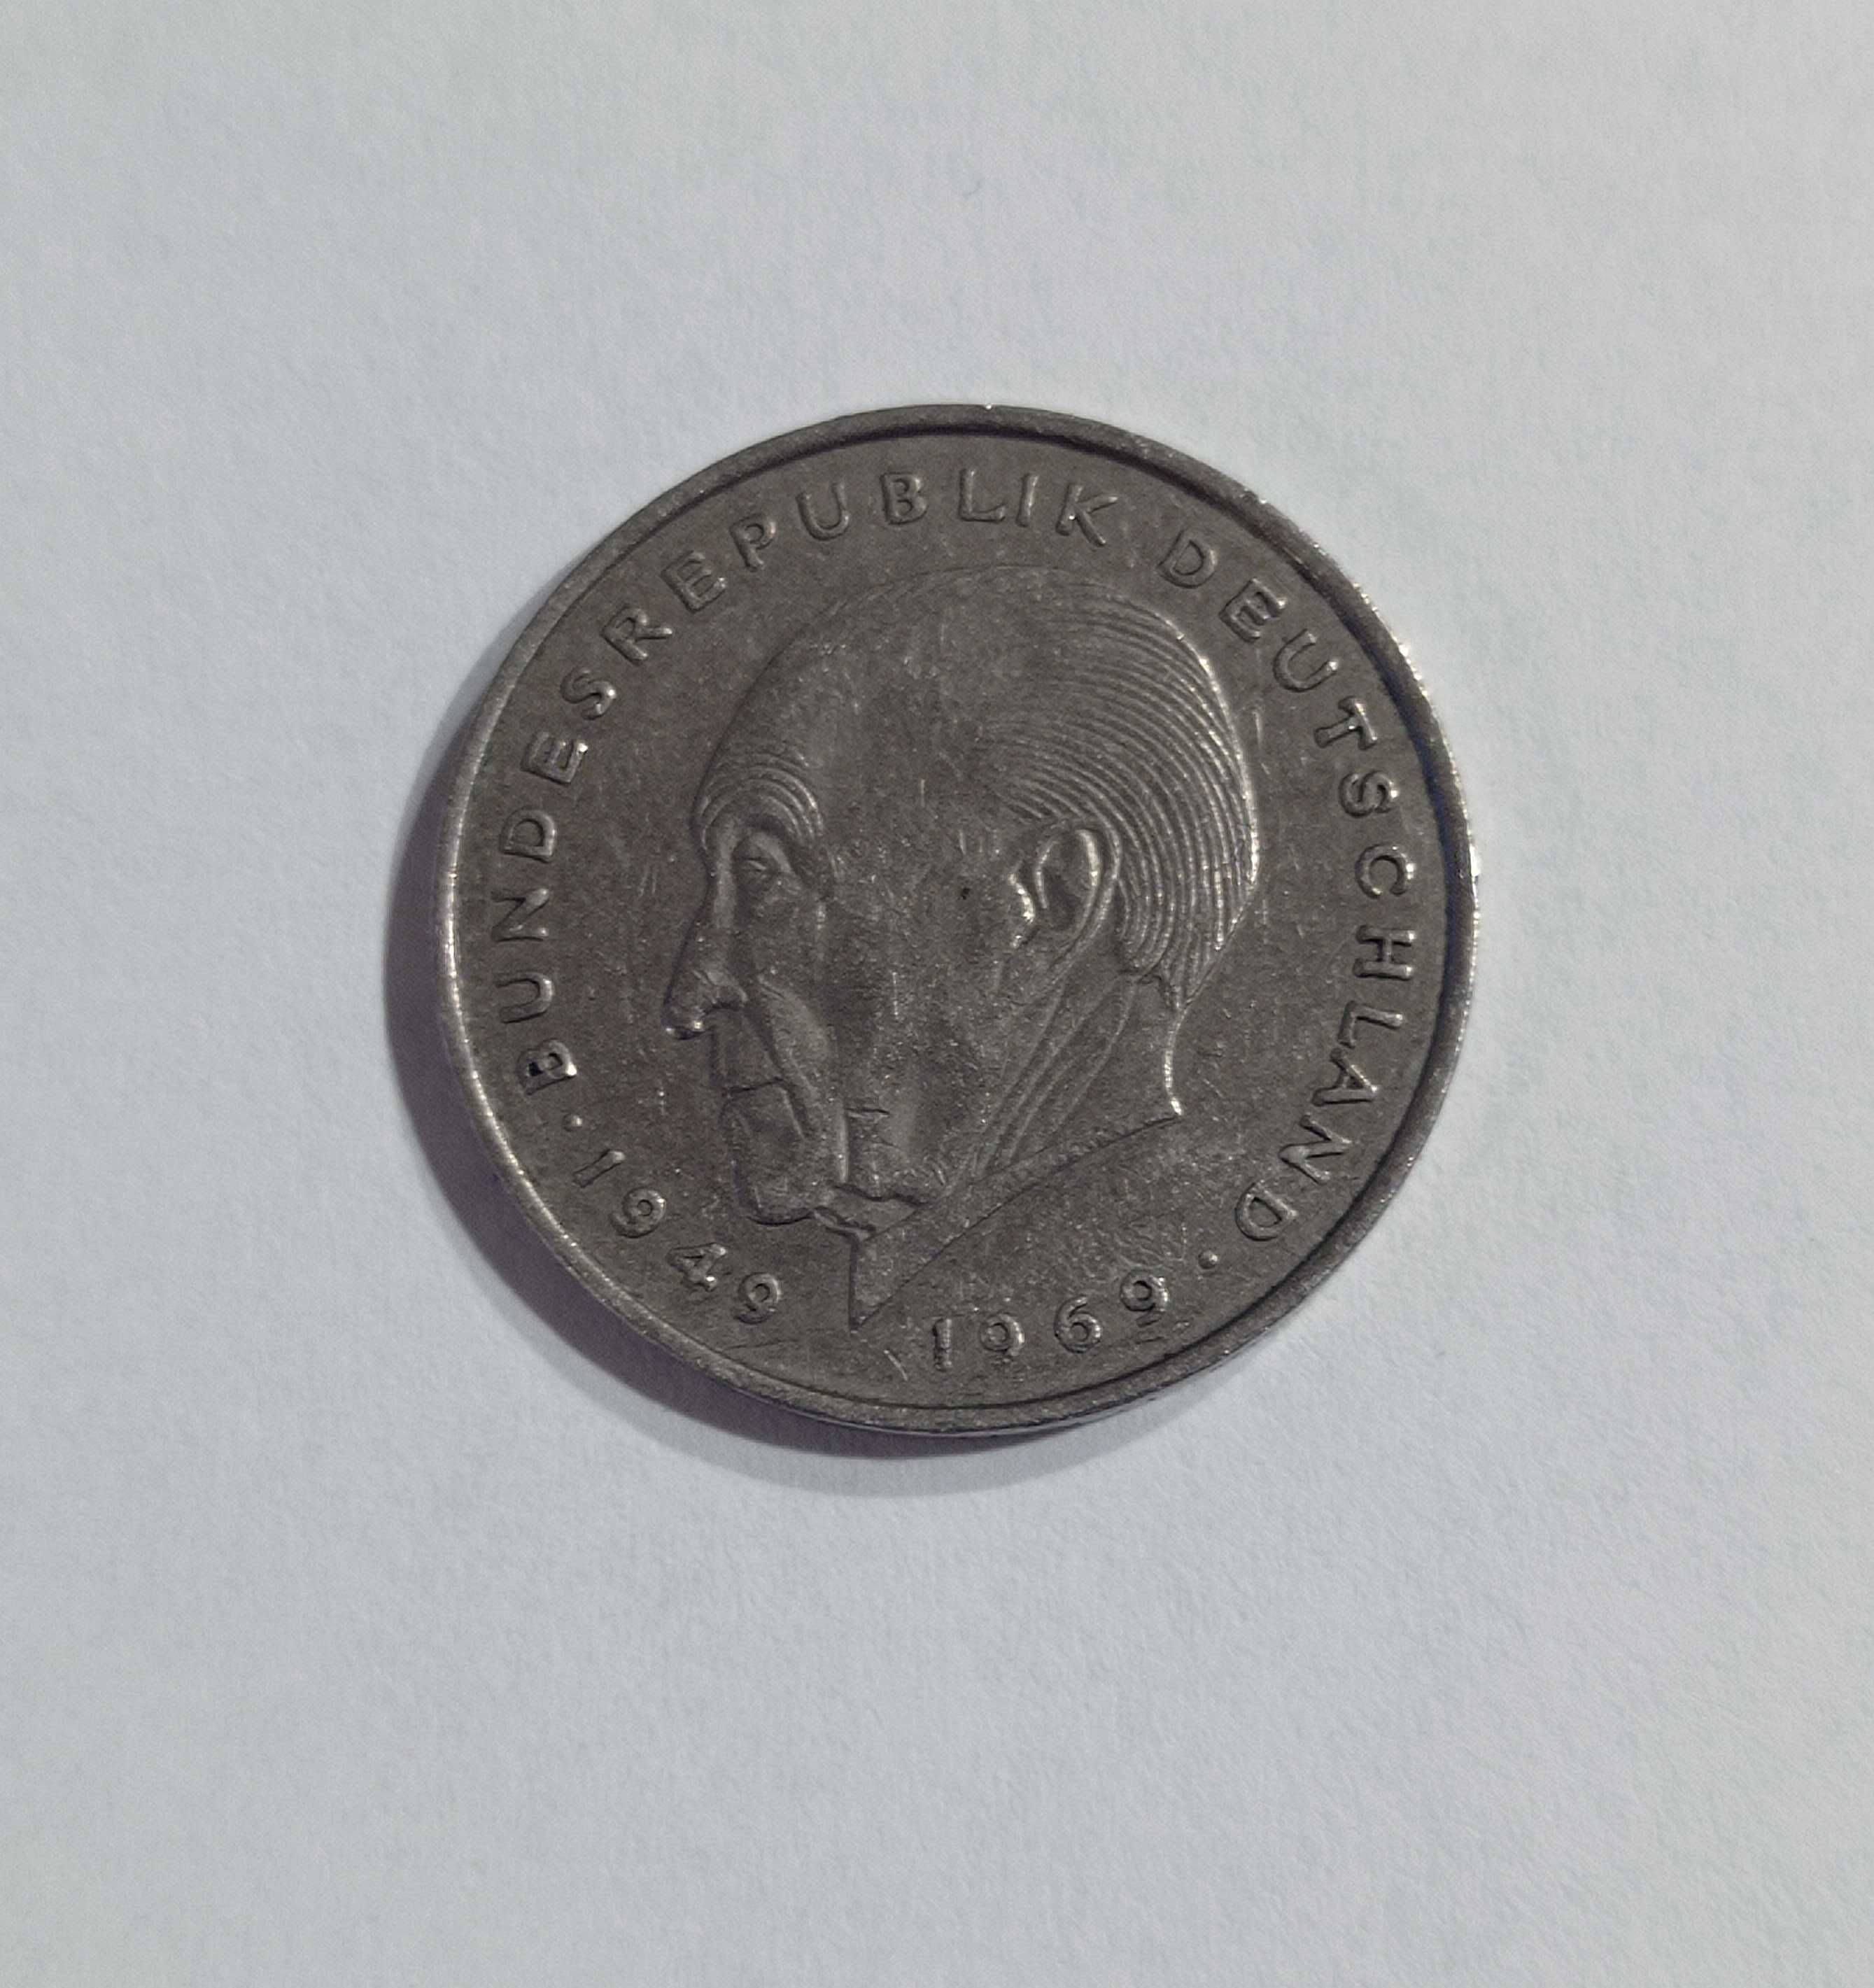 Moneta 2 marki 1972 Niemcy